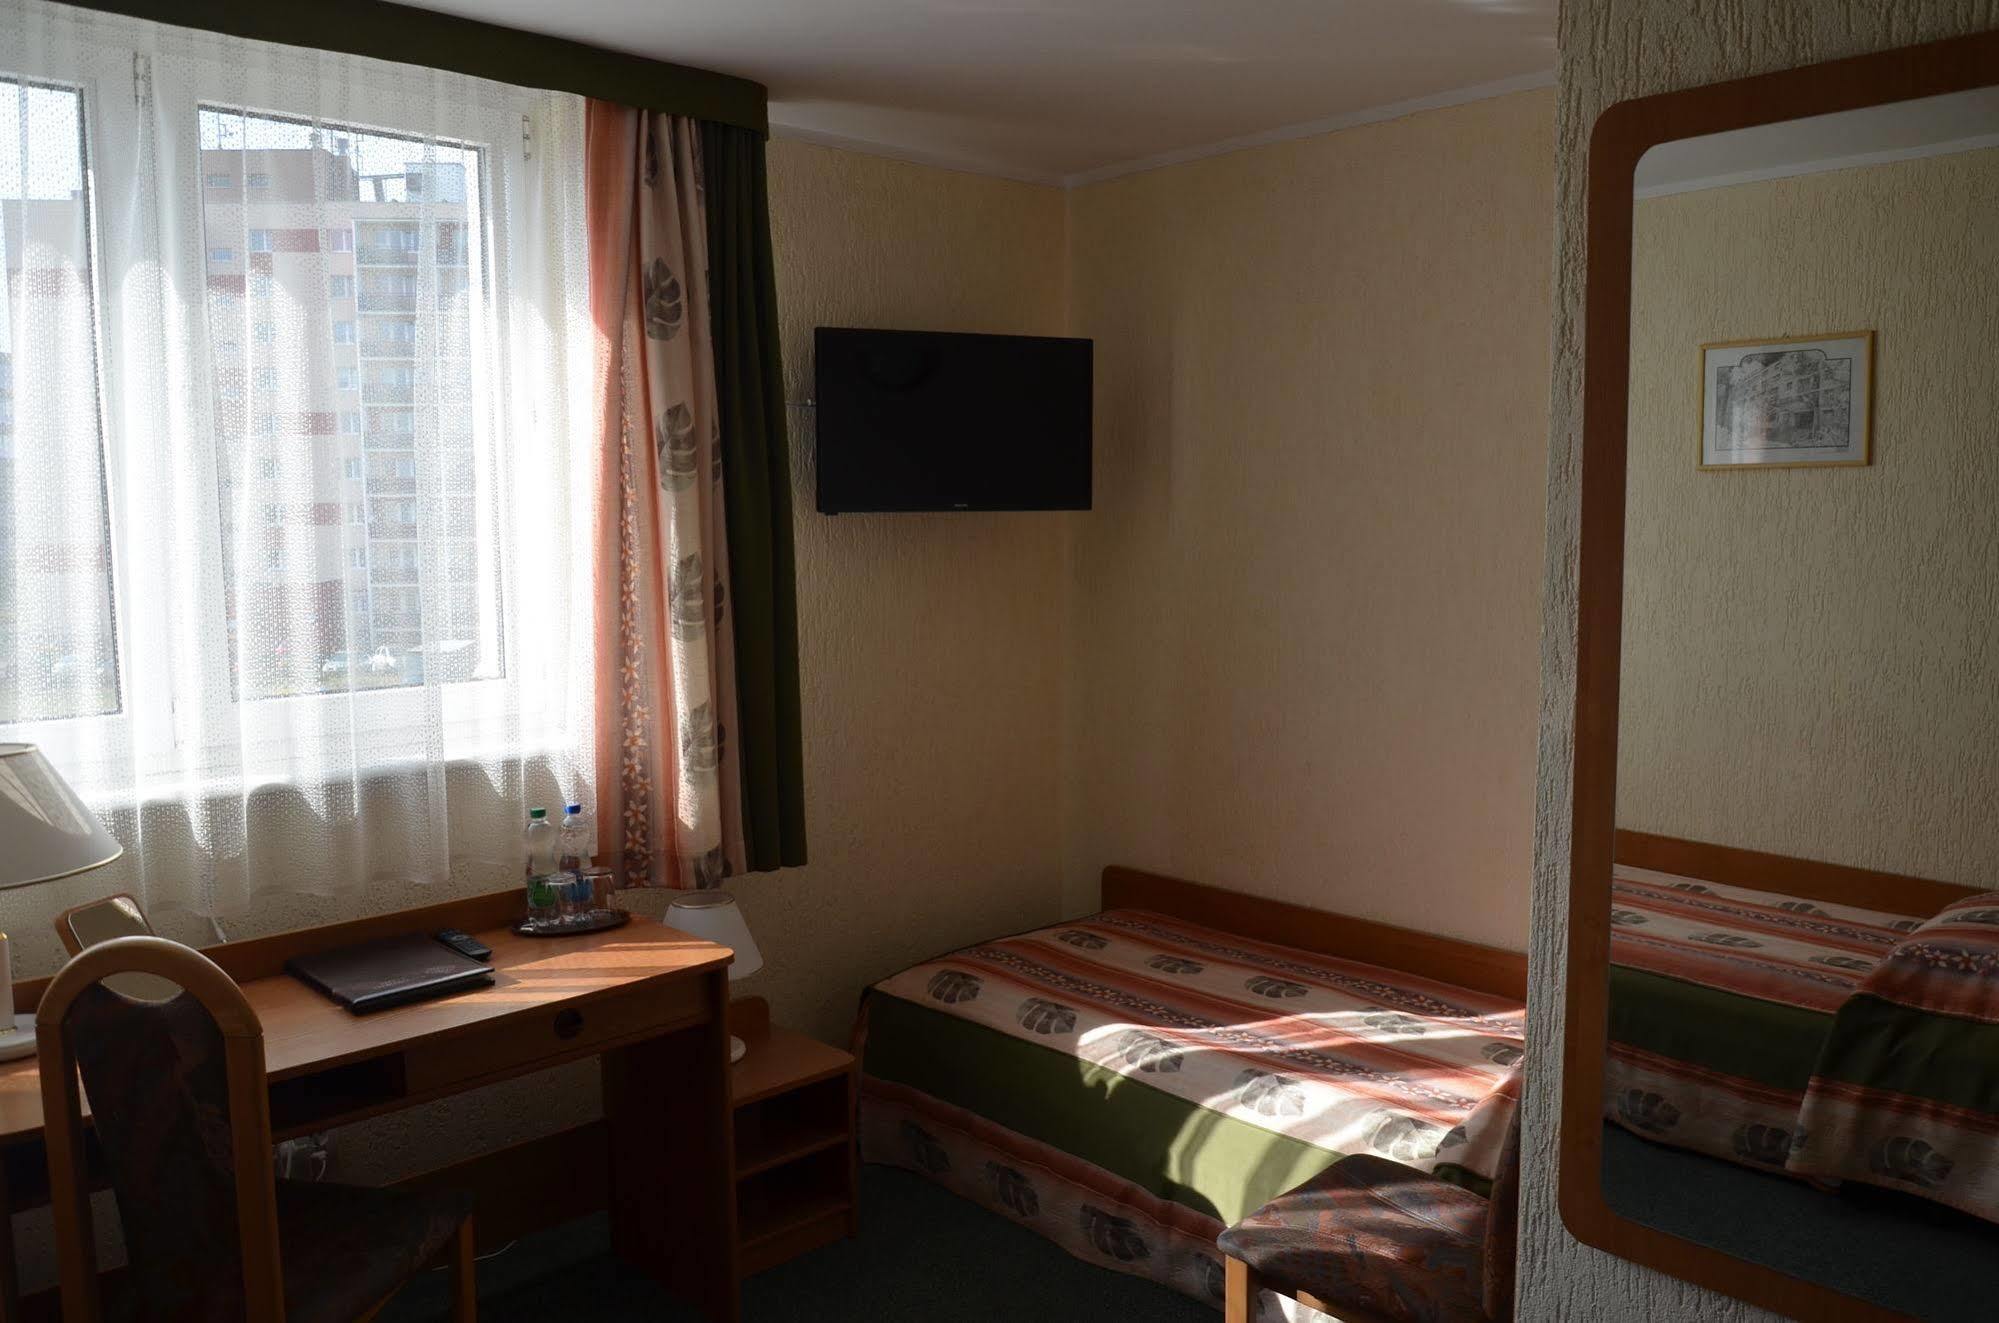 Hotel Gromada Poznań Extérieur photo